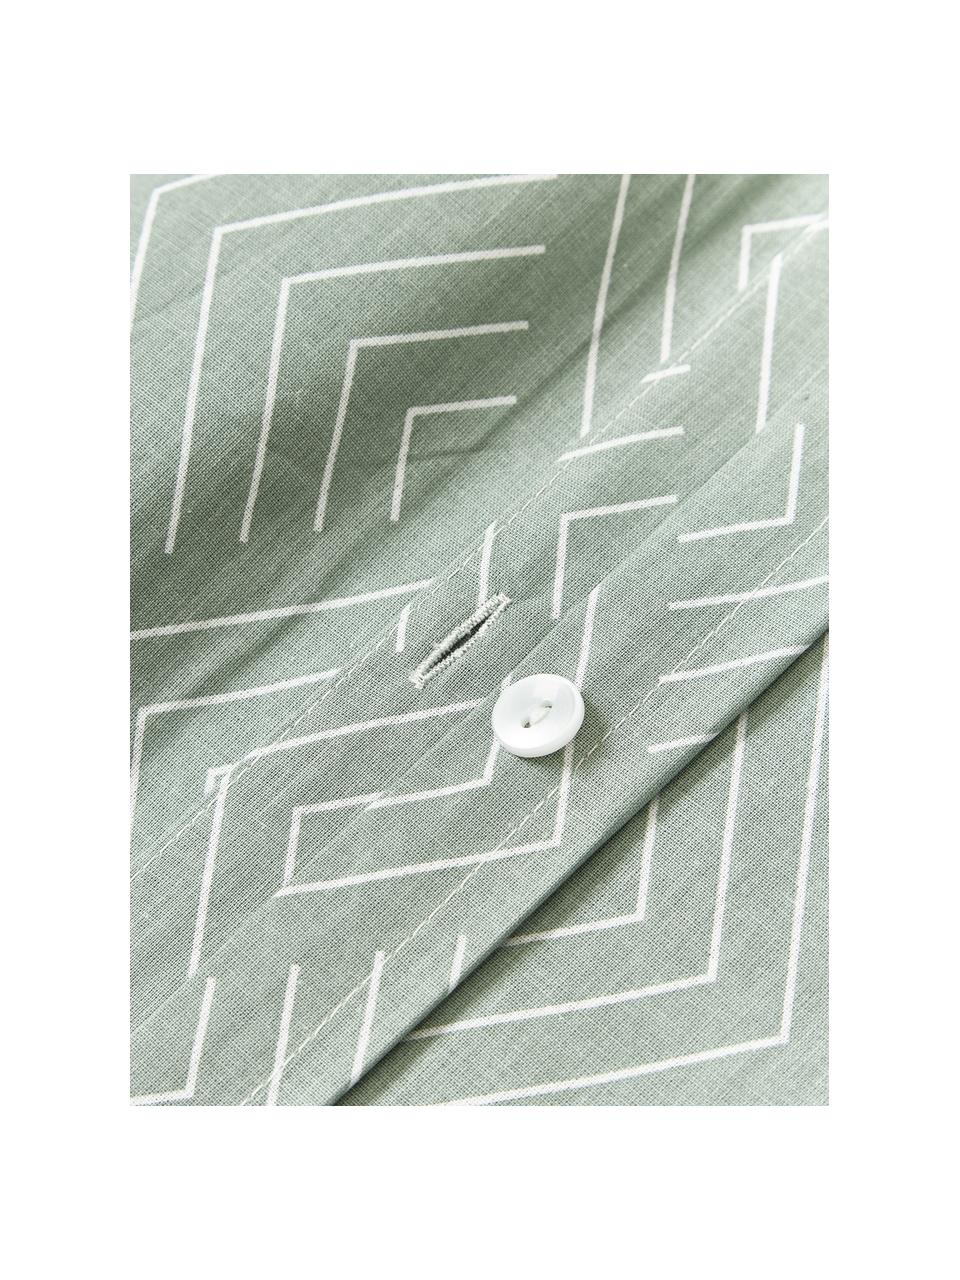 Funda de almohada estampada de algodón Milano, Verde salvia, An 45 x L 110 cm